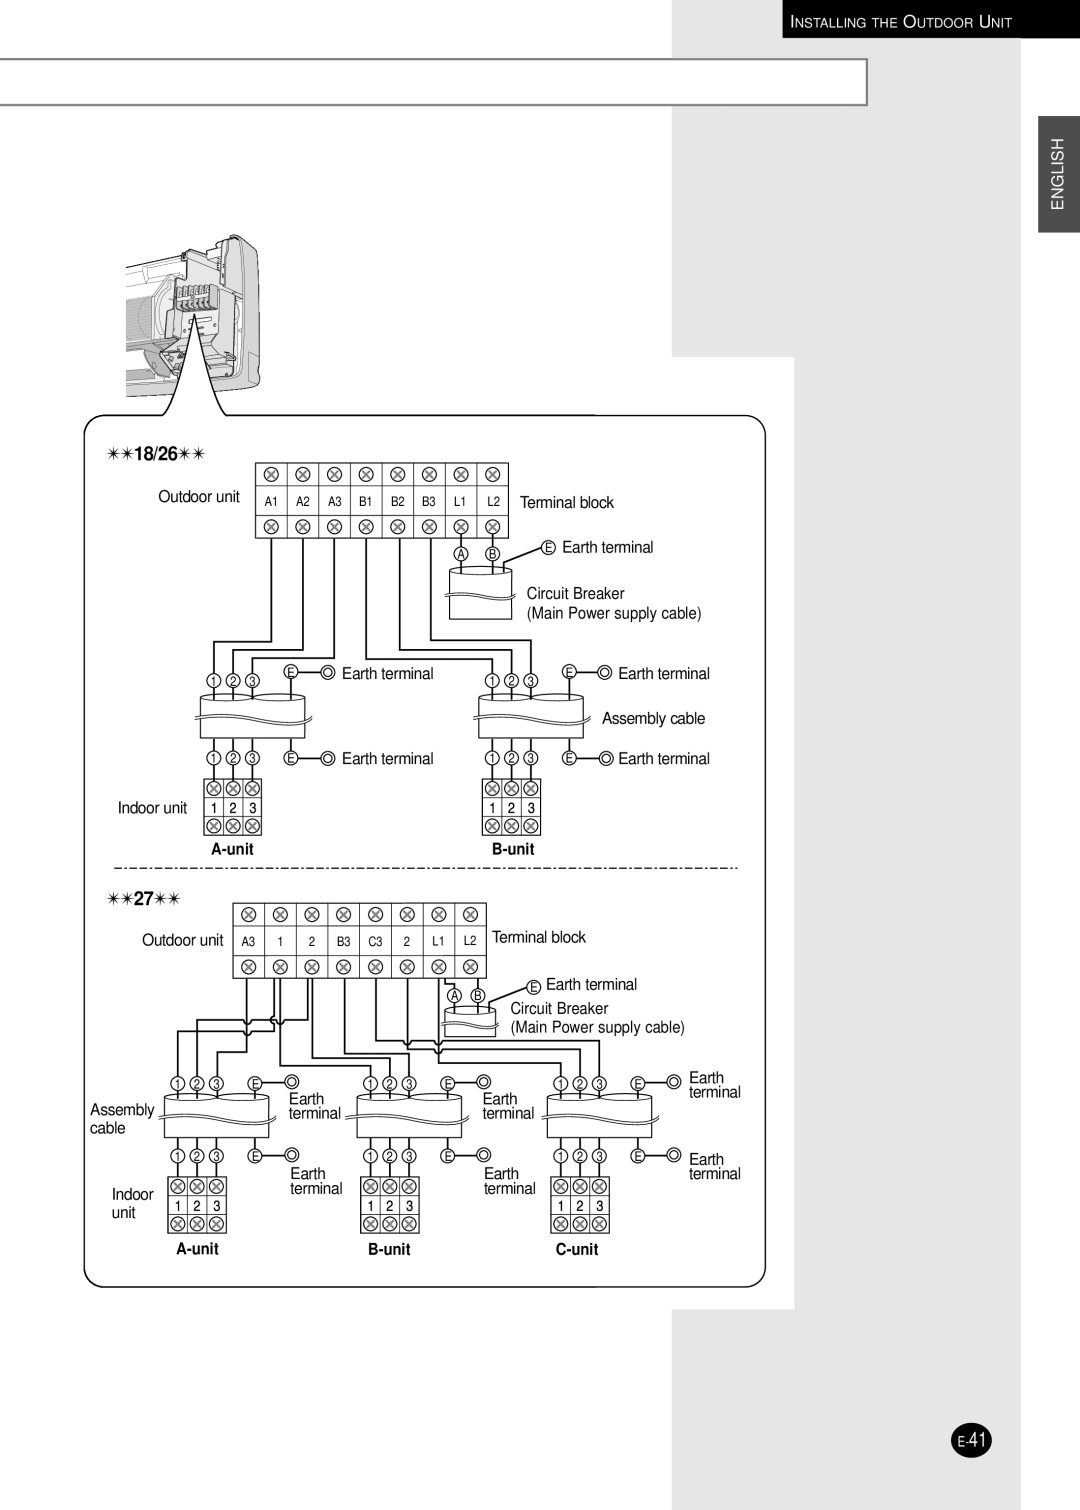 Samsung AM26B1C13, UM18B1C2, UM26B1C2, UM27B1C3, AM27B1C13, AM27B1C07 installation manual 18/26, English, A-unit, B-unit 